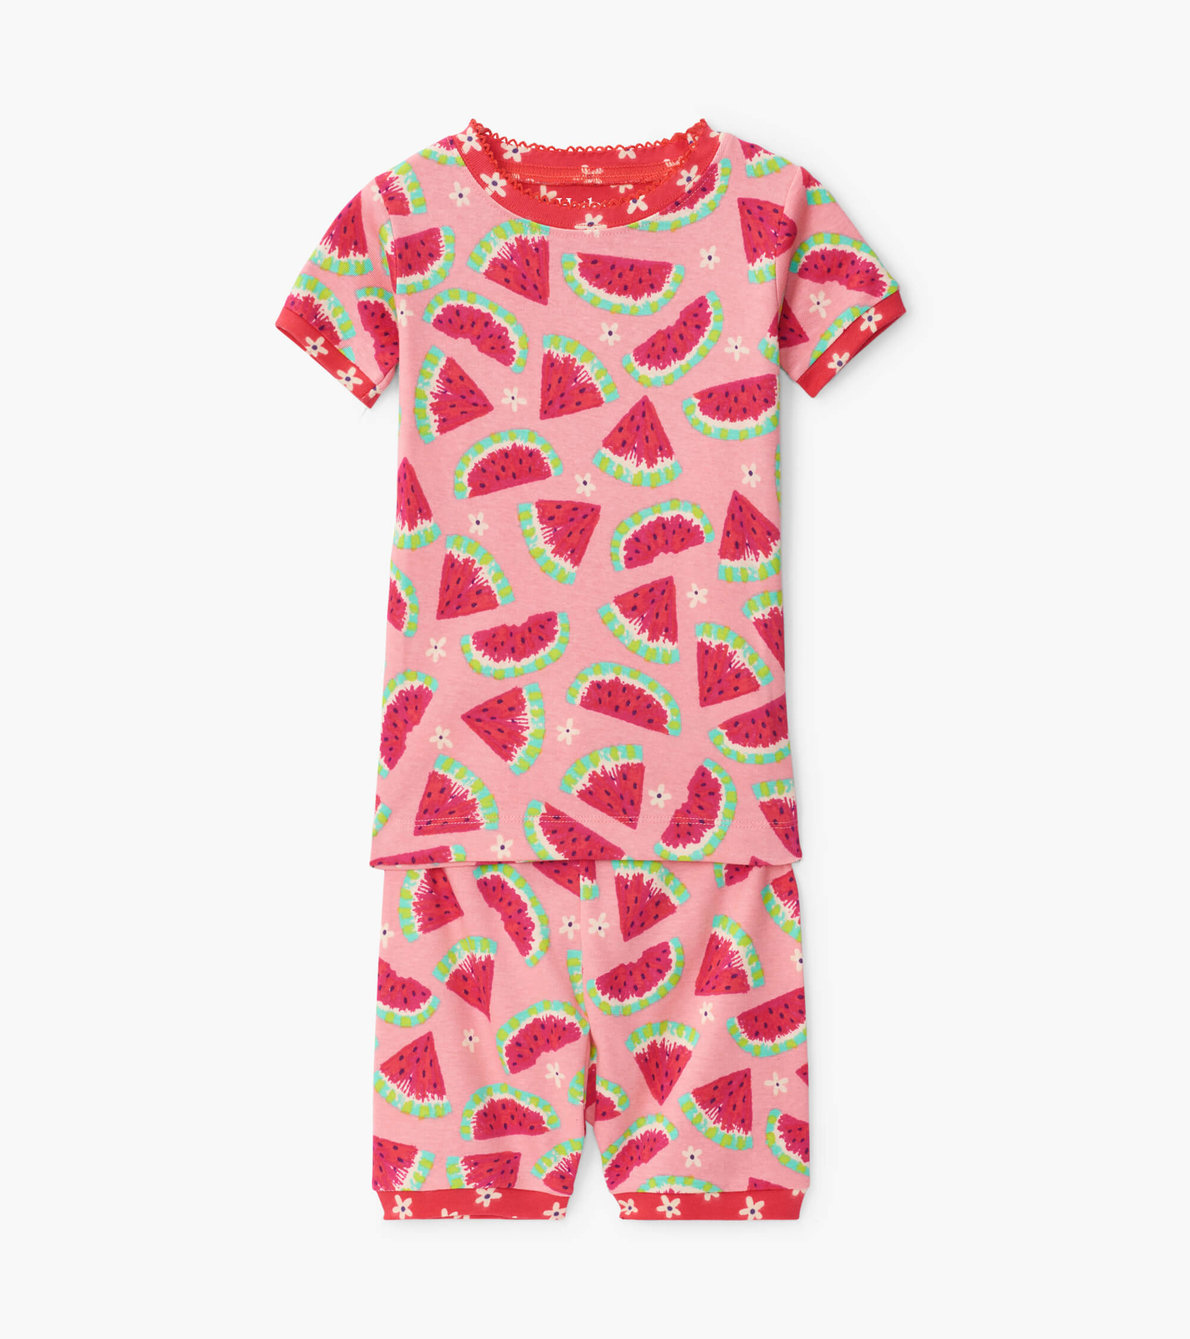 View larger image of Watermelon Slices Organic Cotton Short Pajama Set